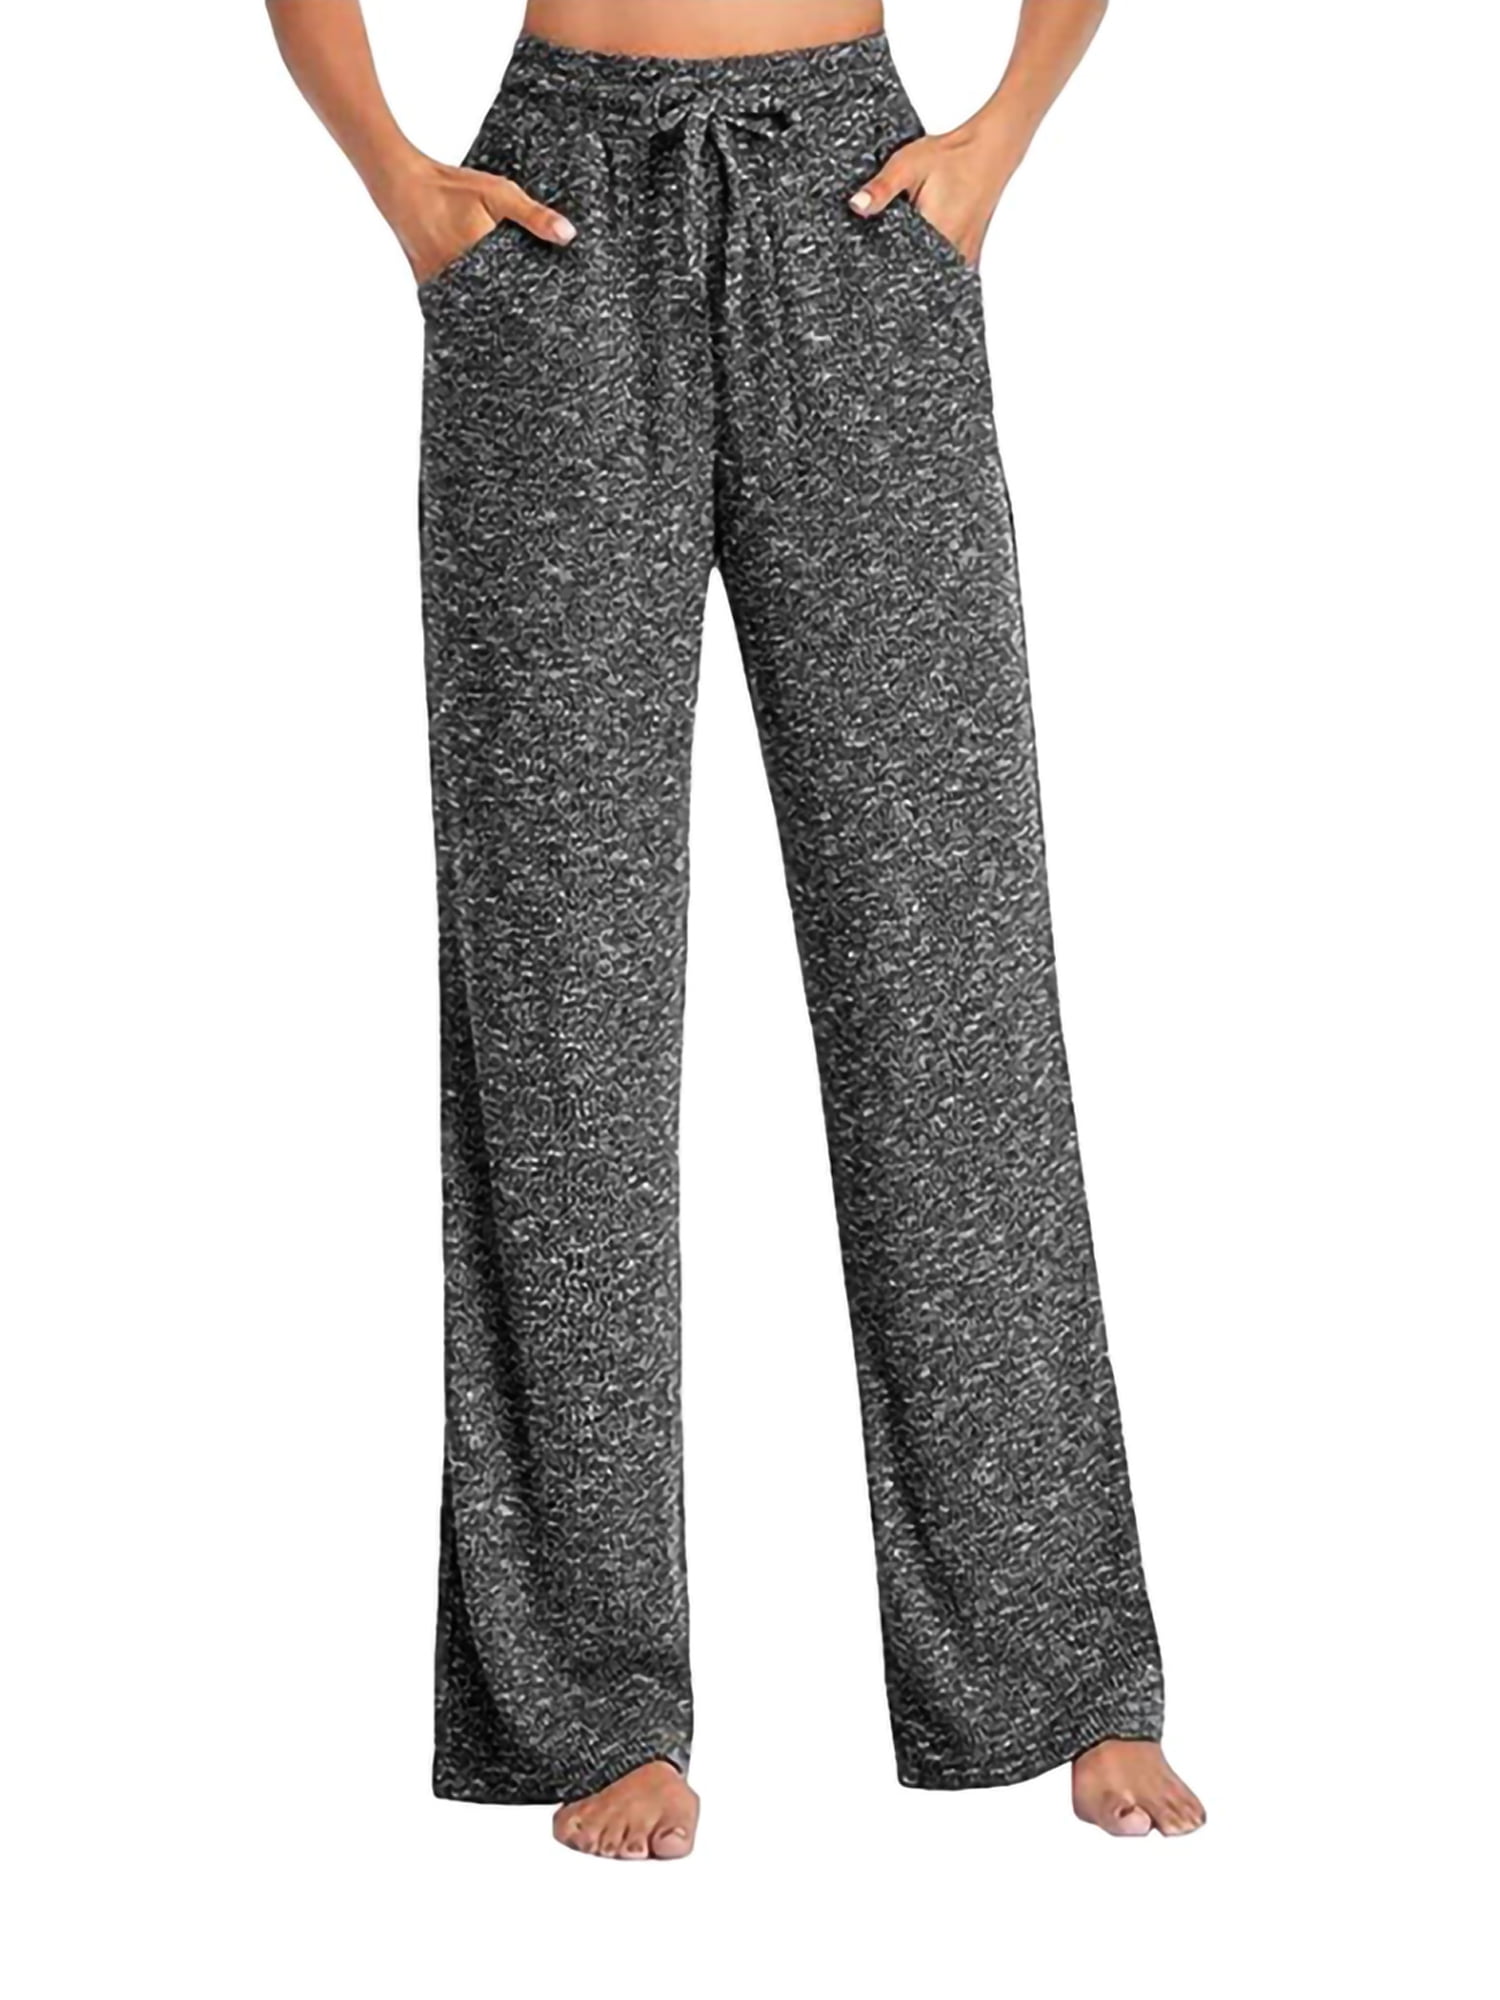 Buy Women's Wide Leg Lounge Pajama Pants - Colsie™ Navy XL